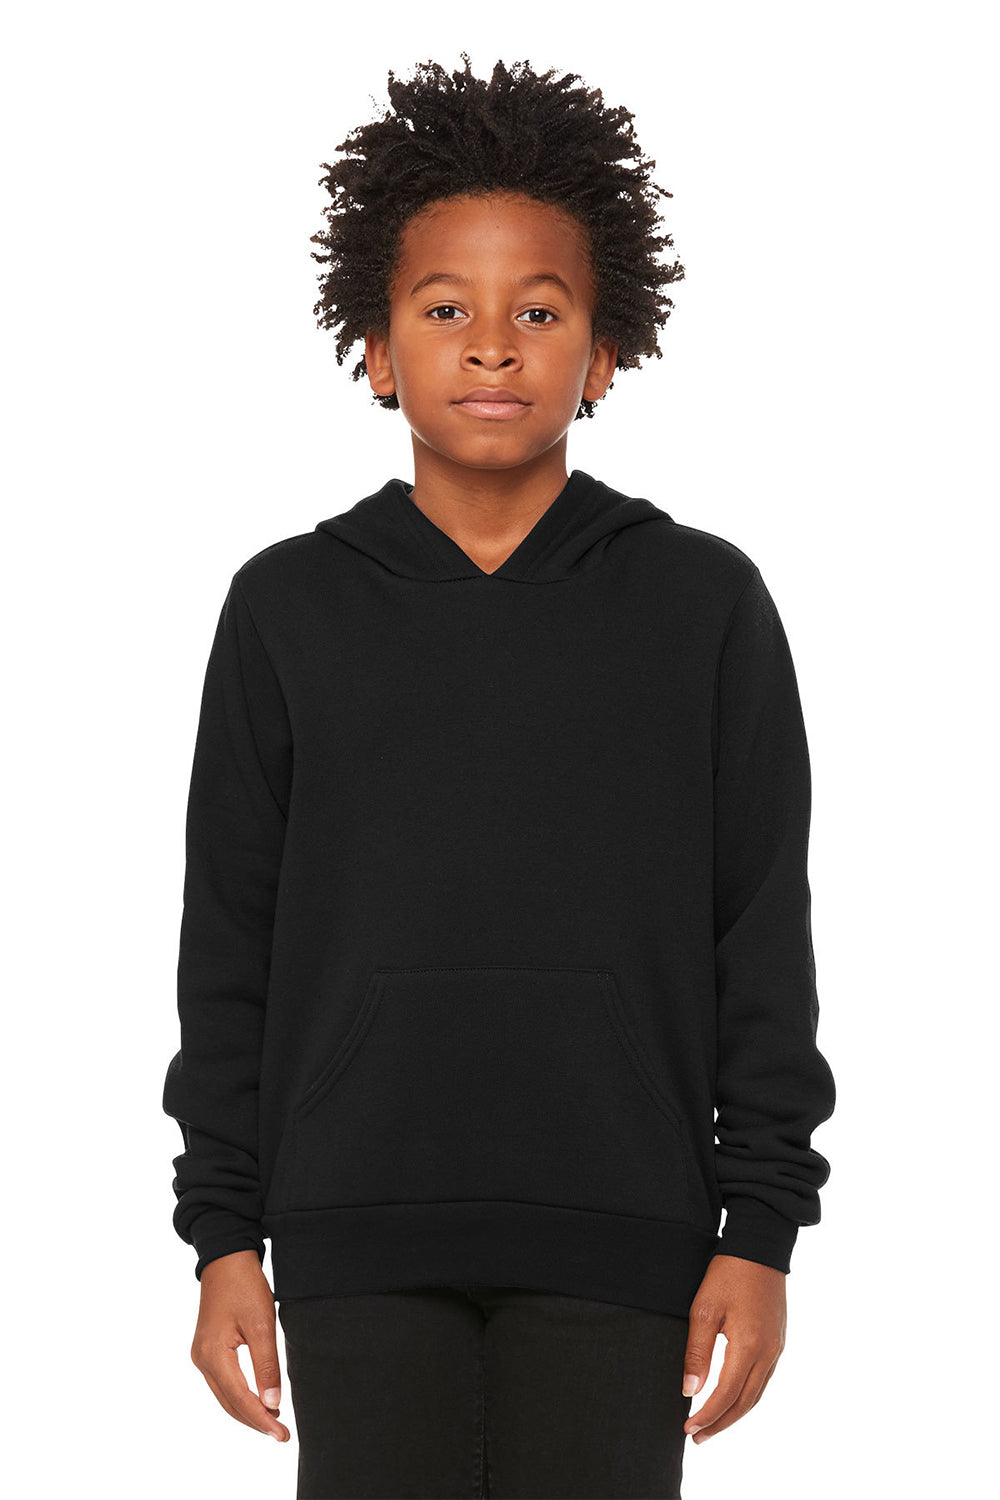 Bella + Canvas 3719Y/BC3719Y Youth Sponge Fleece Hooded Sweatshirt Hoodie Black Model Front